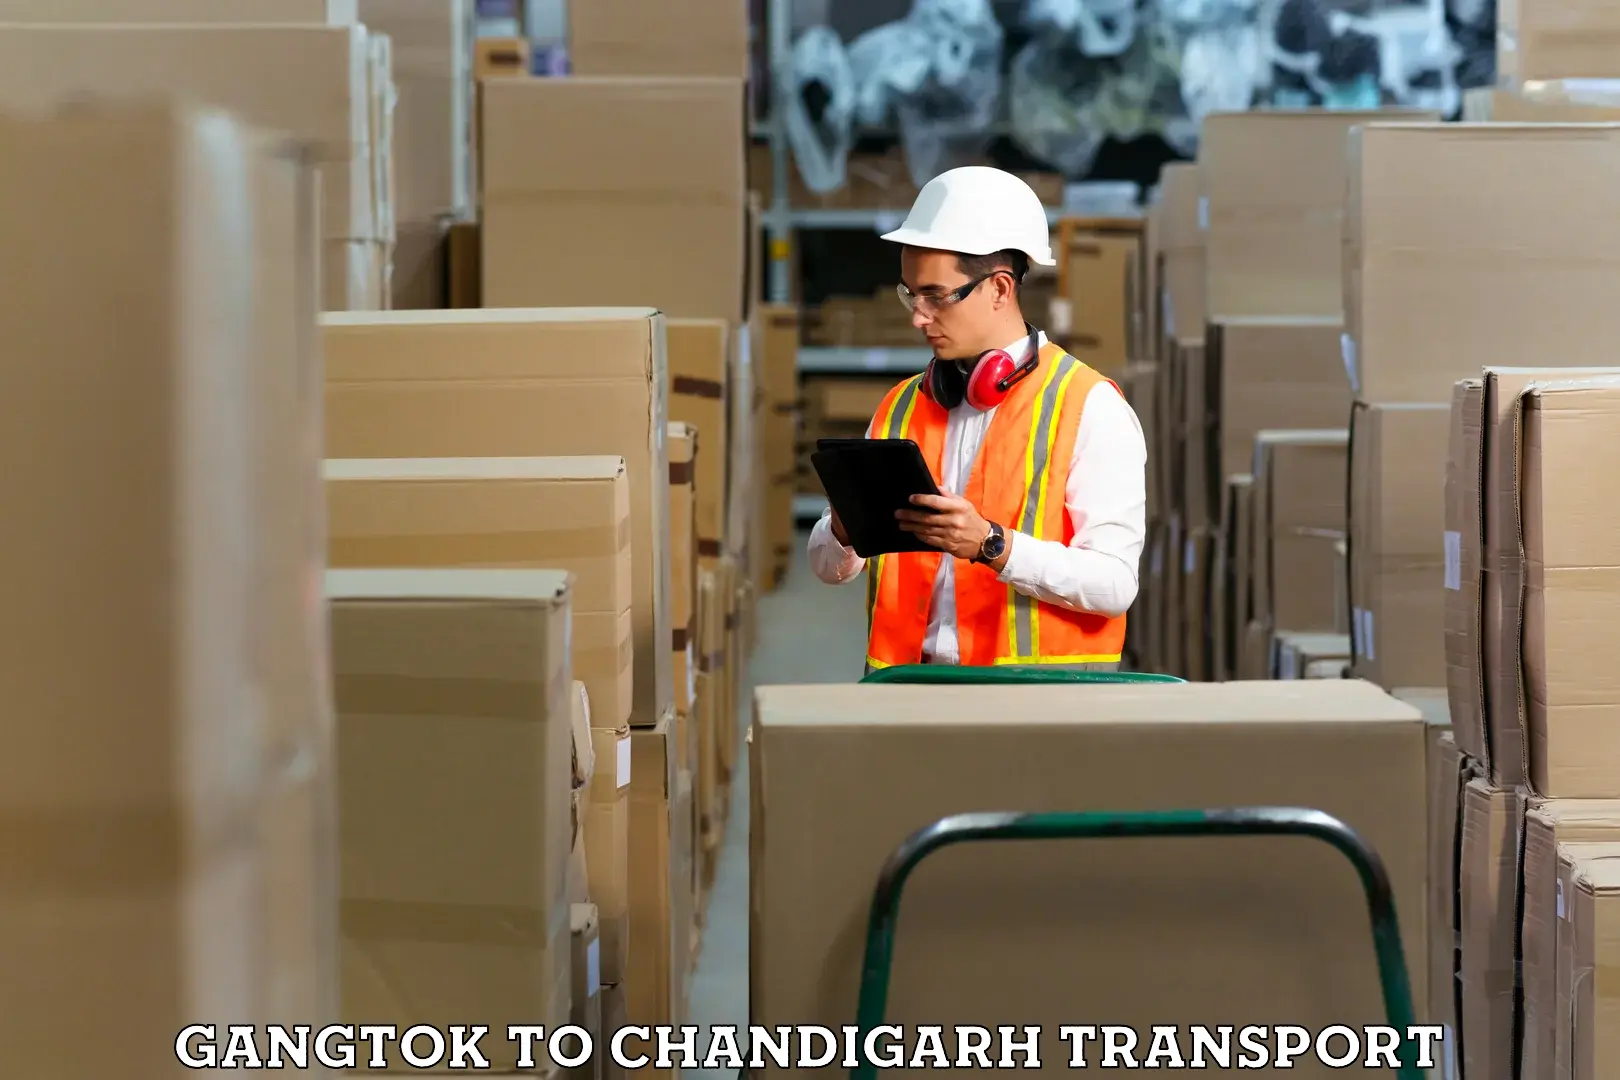 Shipping partner Gangtok to Chandigarh